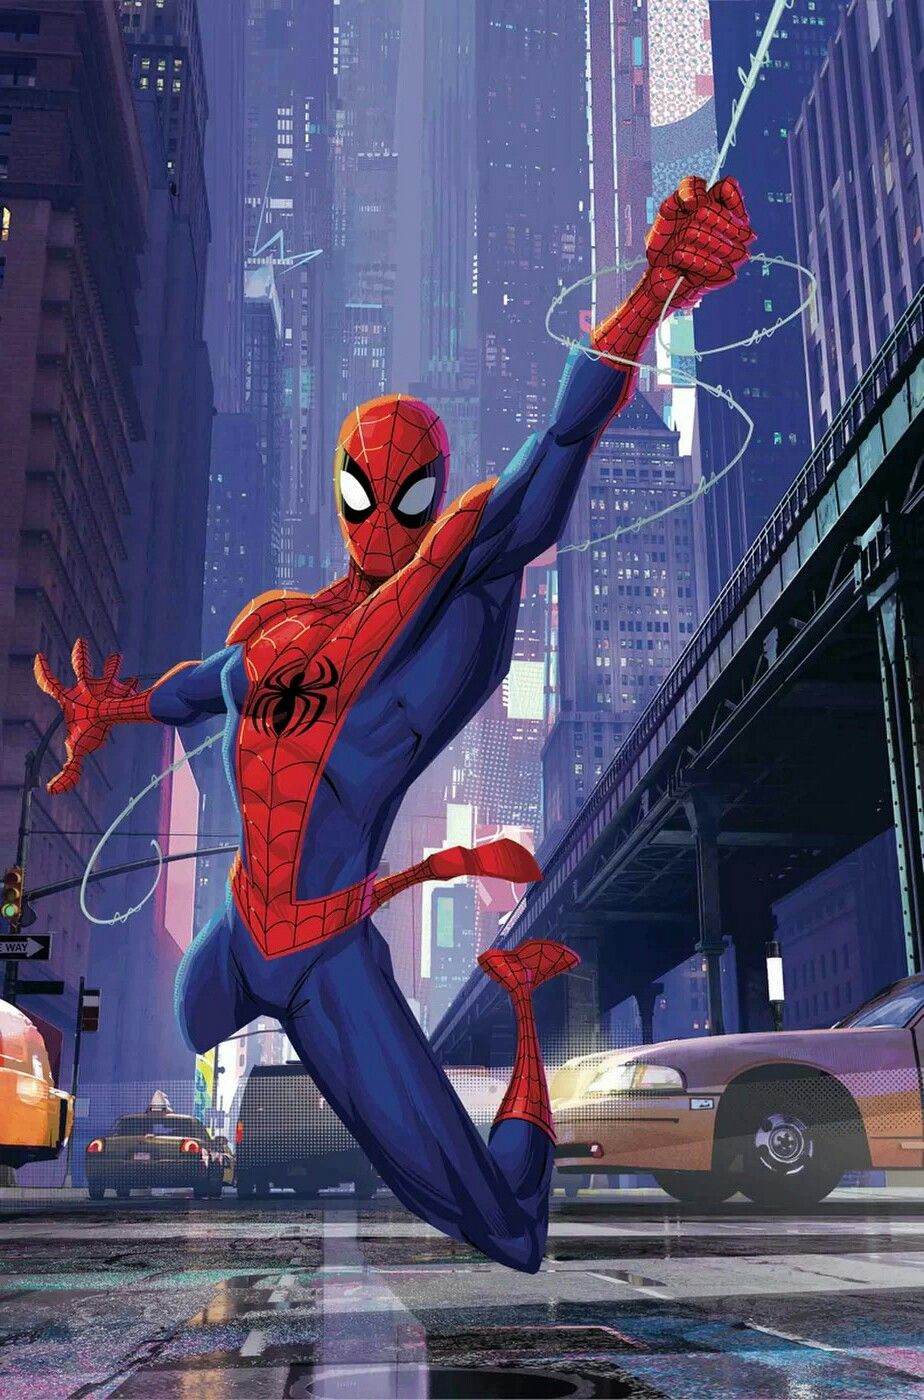 Spiderman wallpaper by artjunctions on DeviantArt